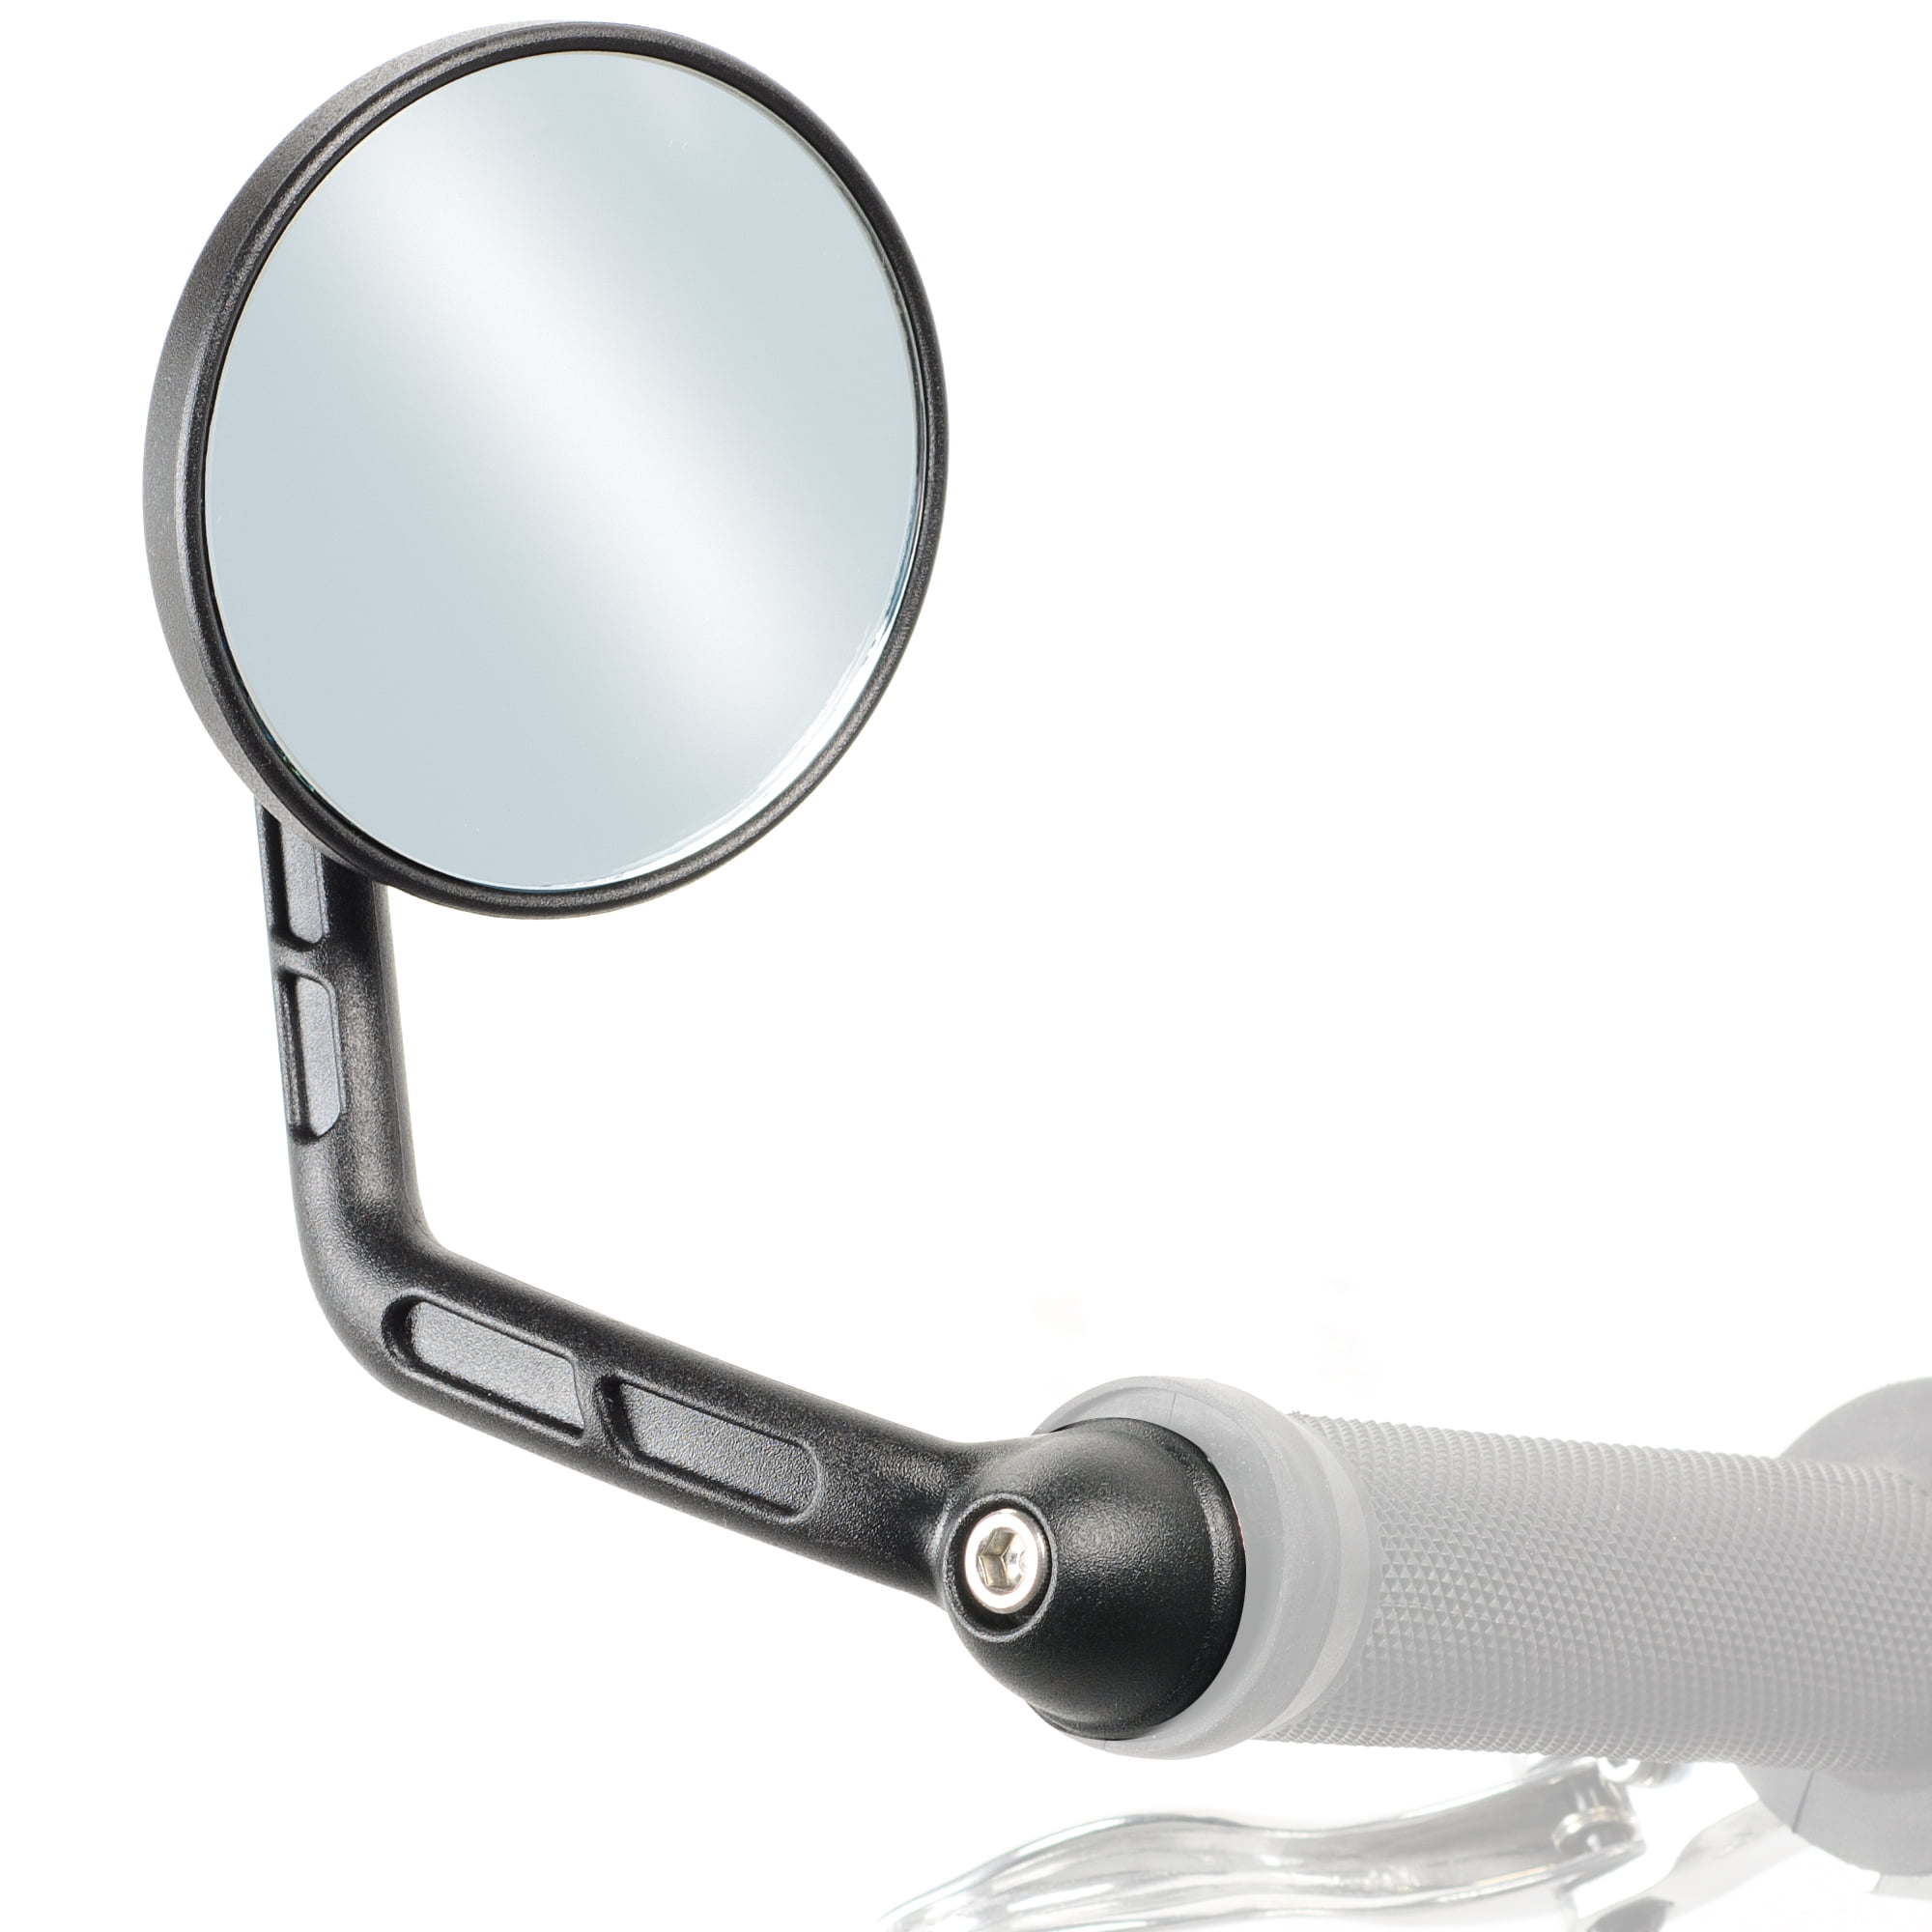 Adjustable 360° Bar End Bike Mirror Safe Rearview Mirror w/Stainless Steel Lens 